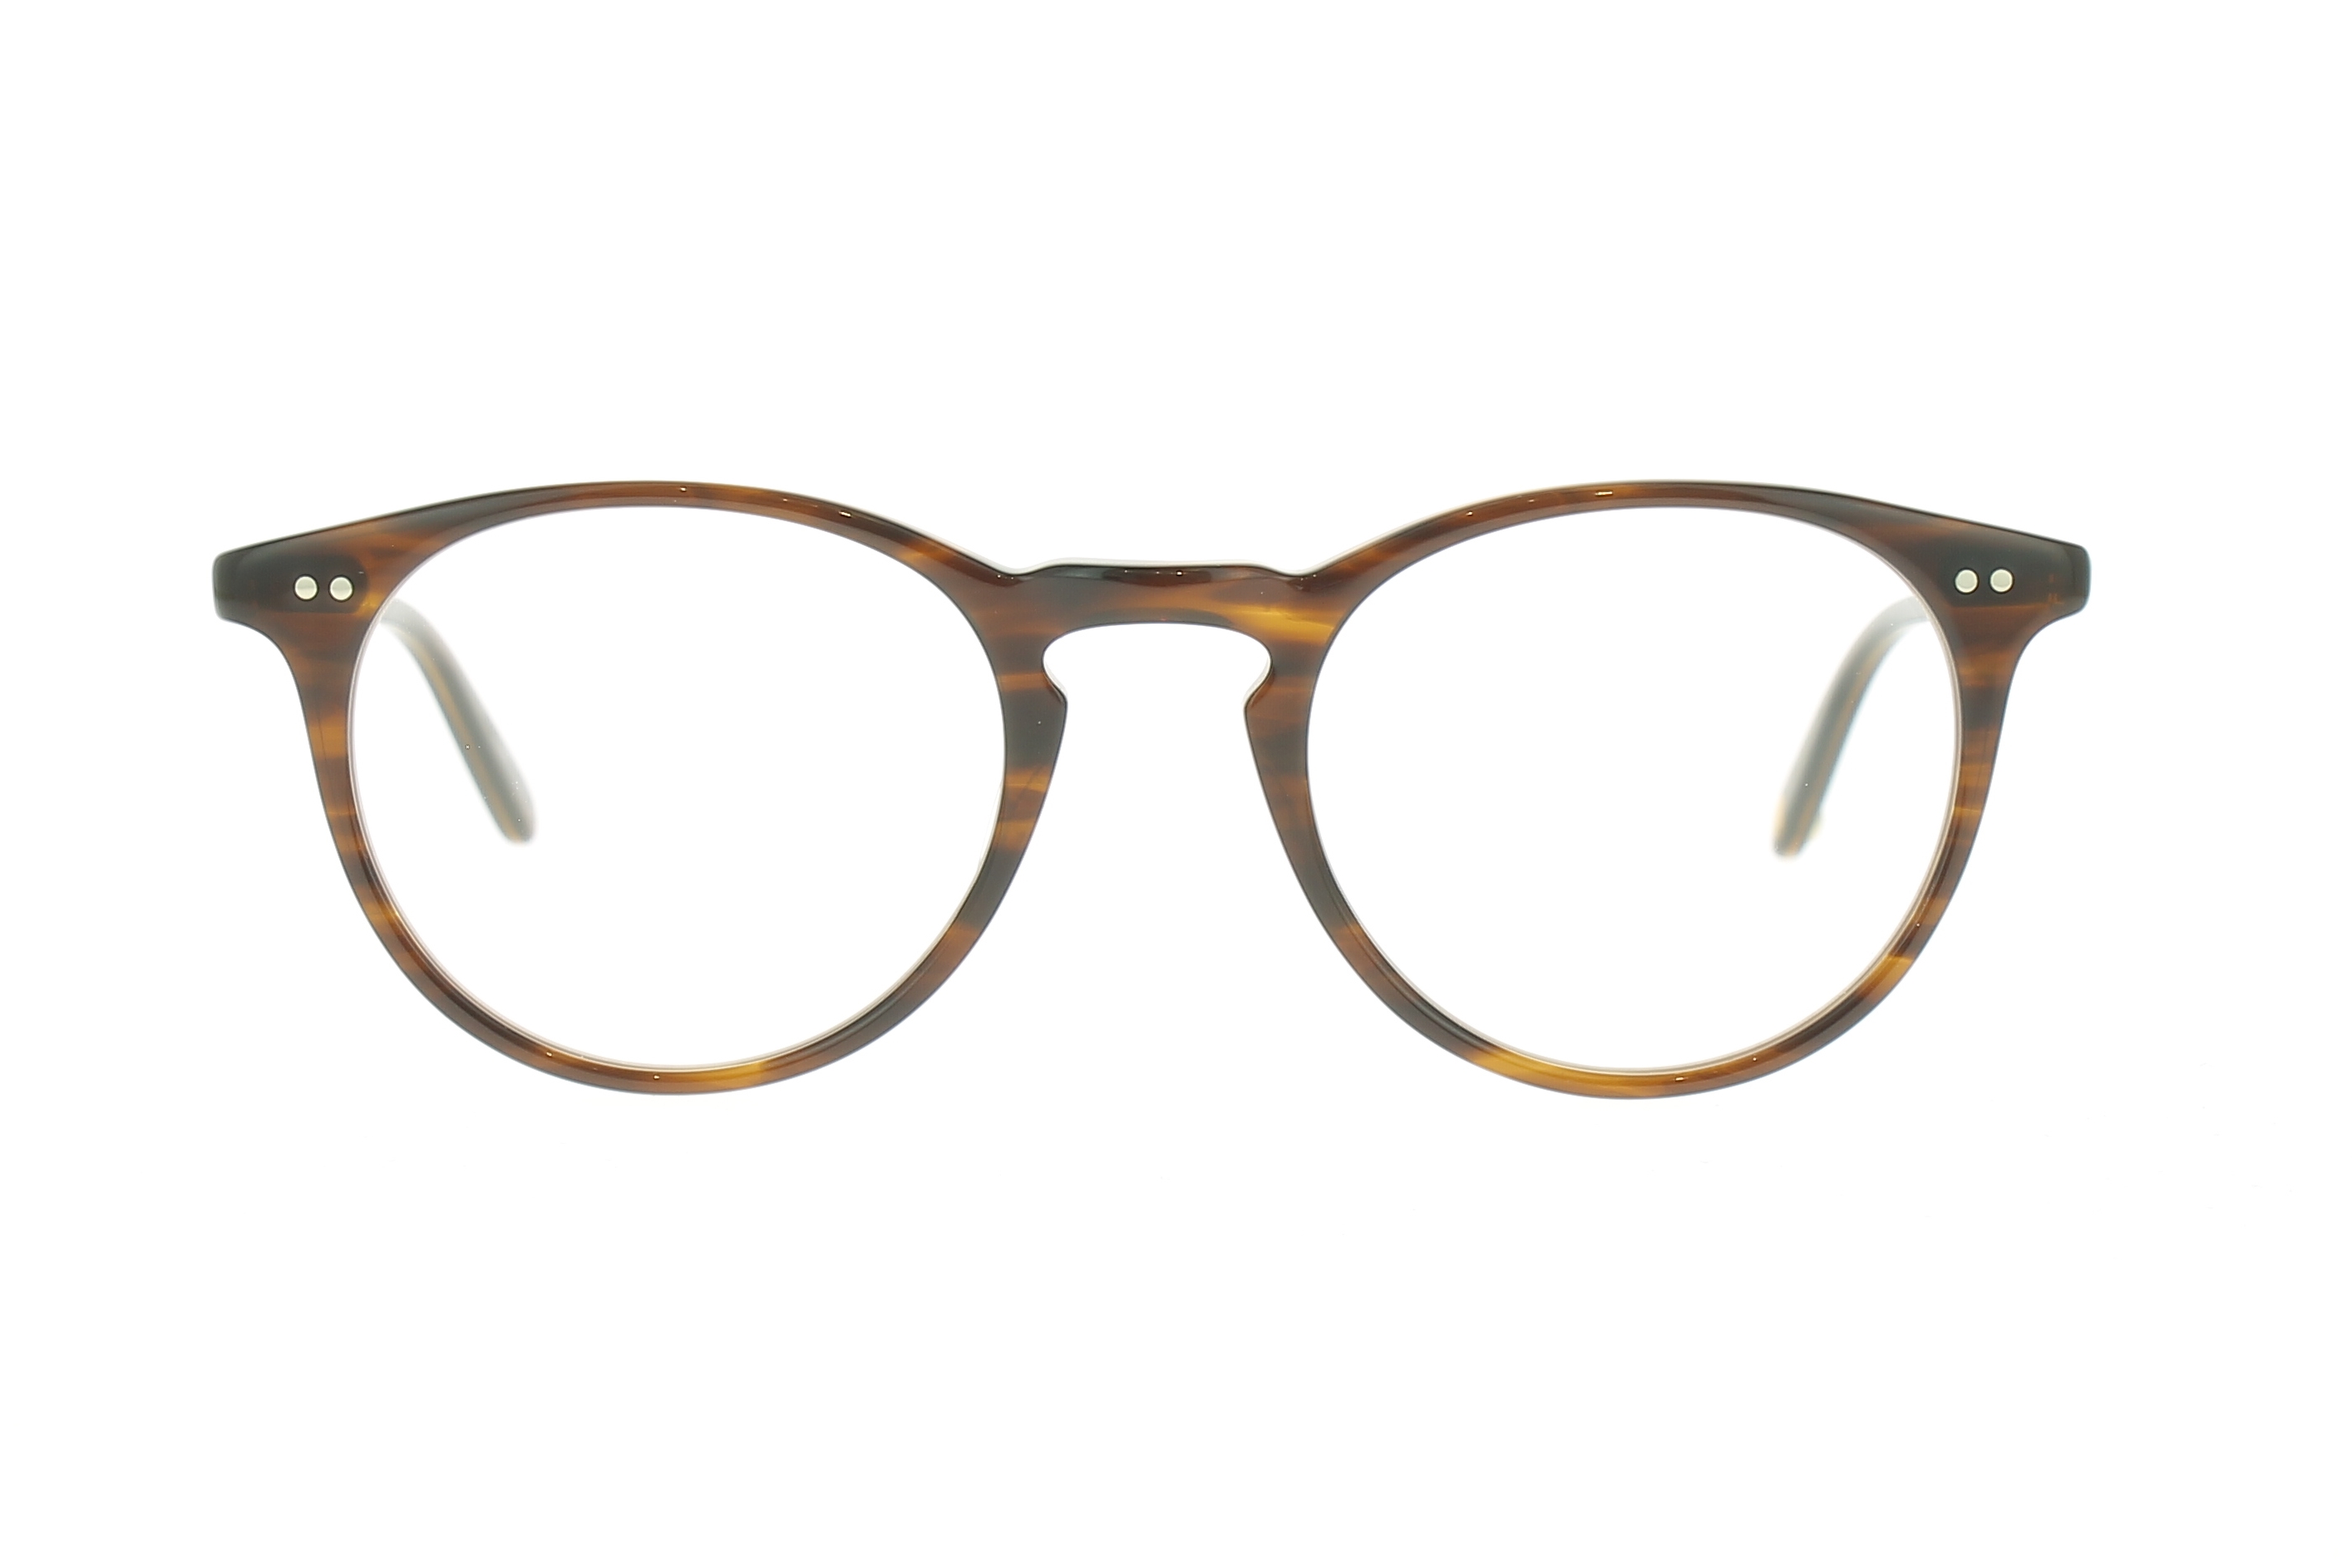 Glasses Garrett-leight Winward, brown colour - Doyle